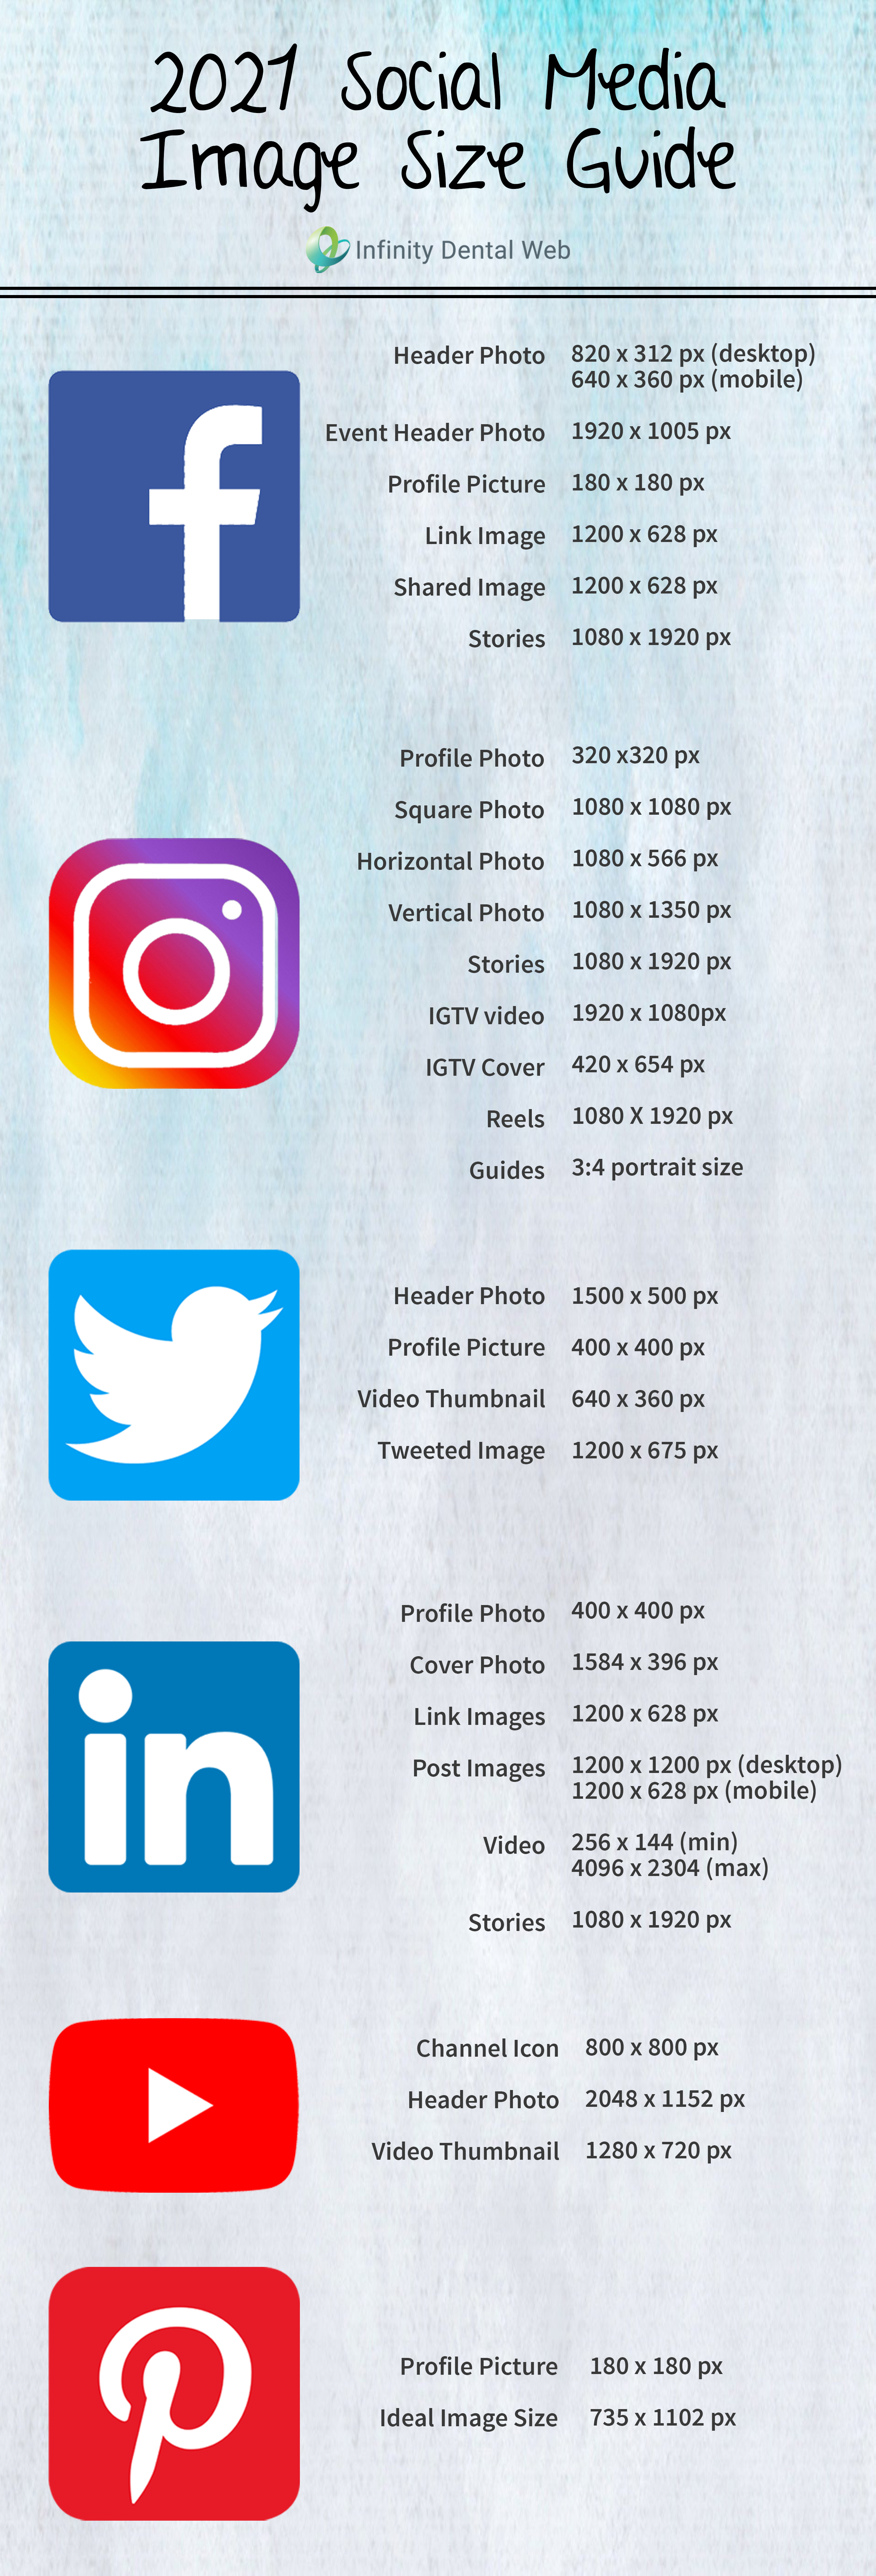 2021 Social Media Image Size Guide